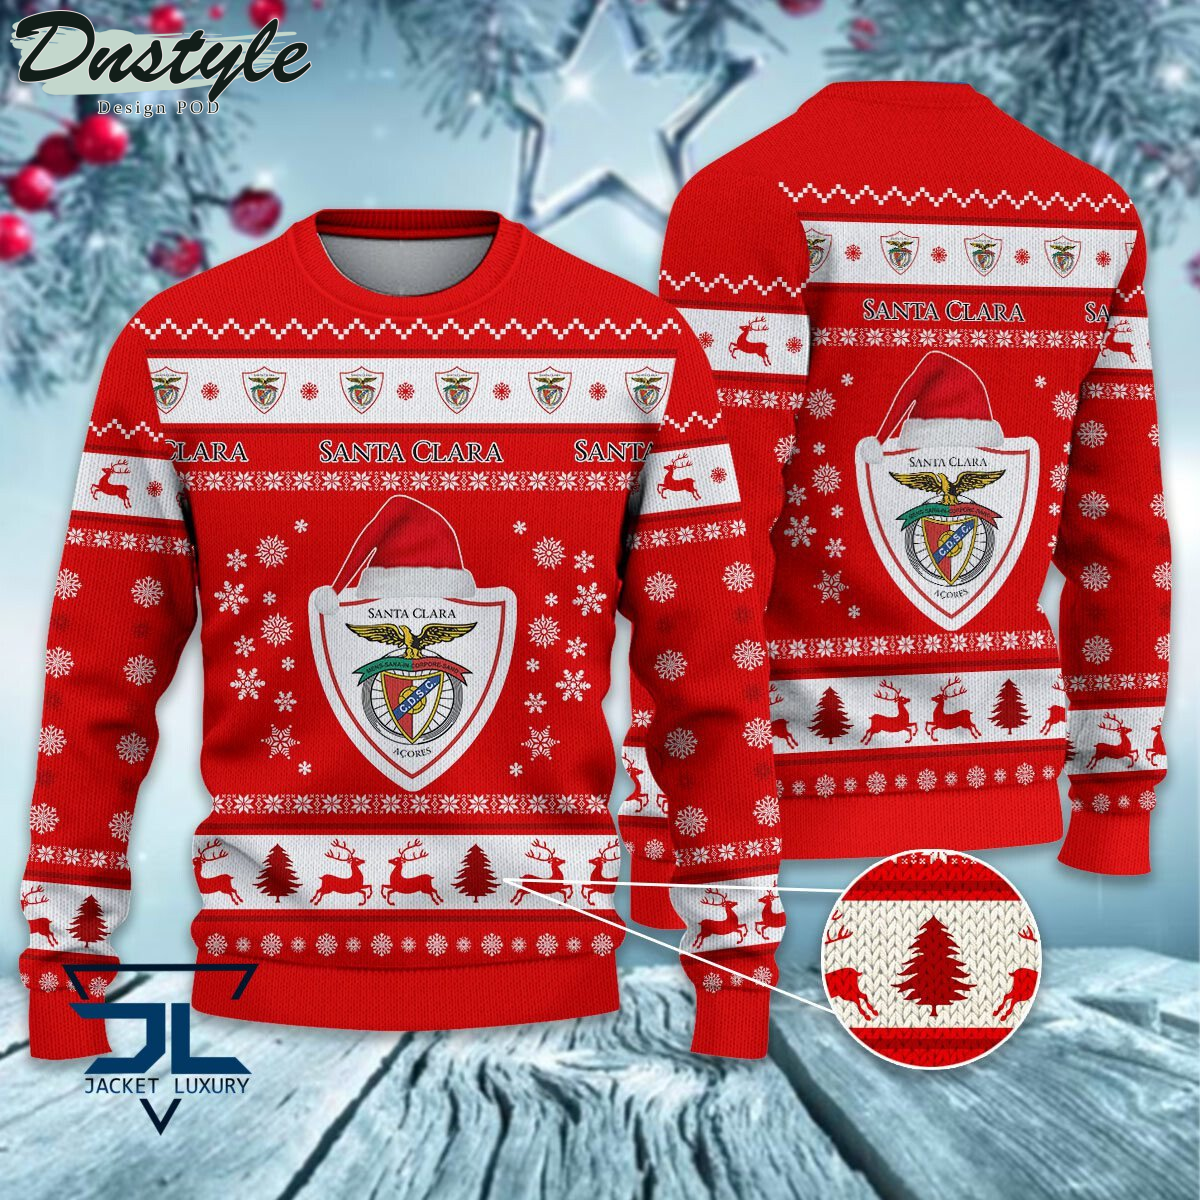 S.C.U. Torreense ugly christmas sweater